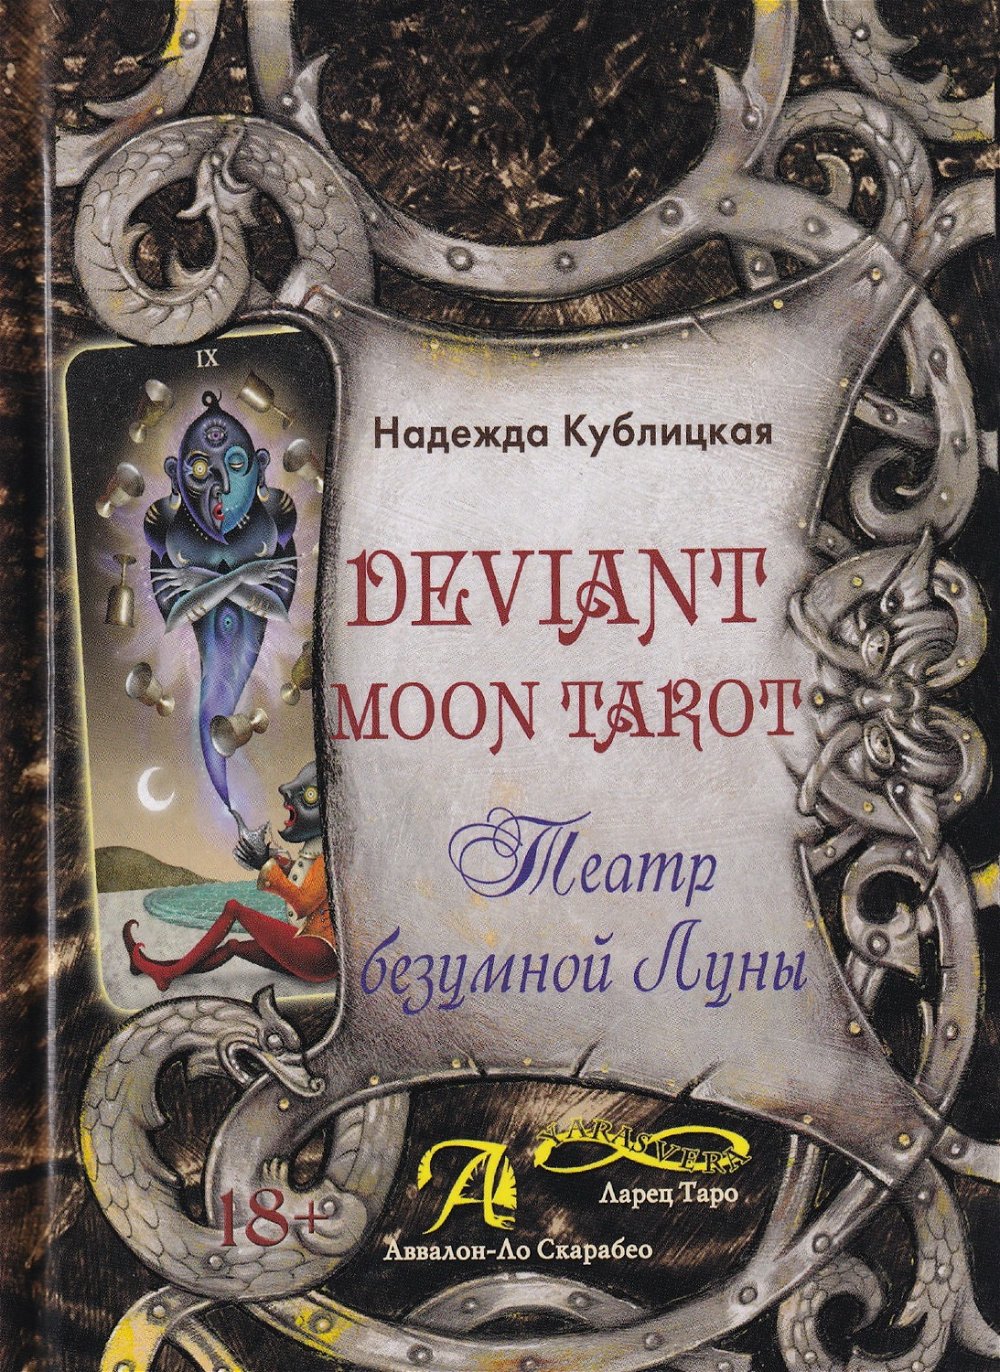 "Deviant Moon Tarot. Театр безумной луны" 